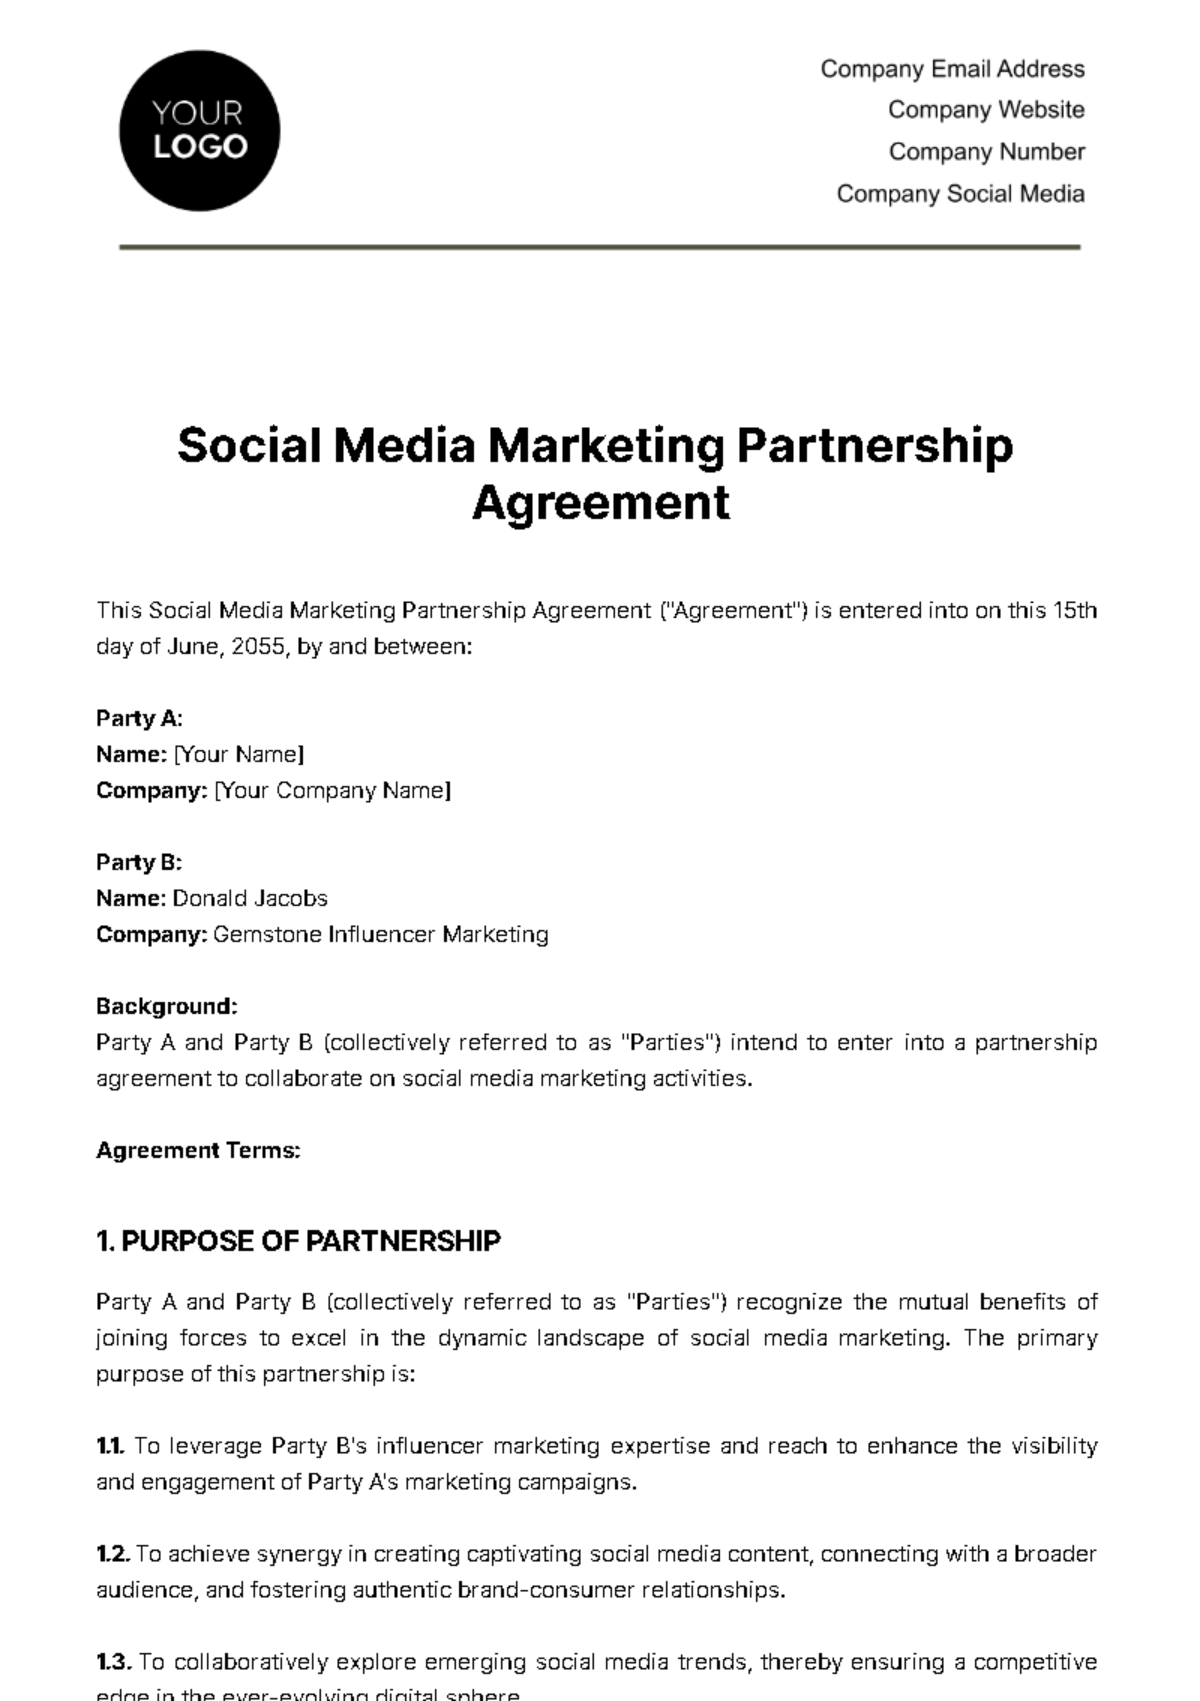 Social Media Marketing Partnership Agreement Template